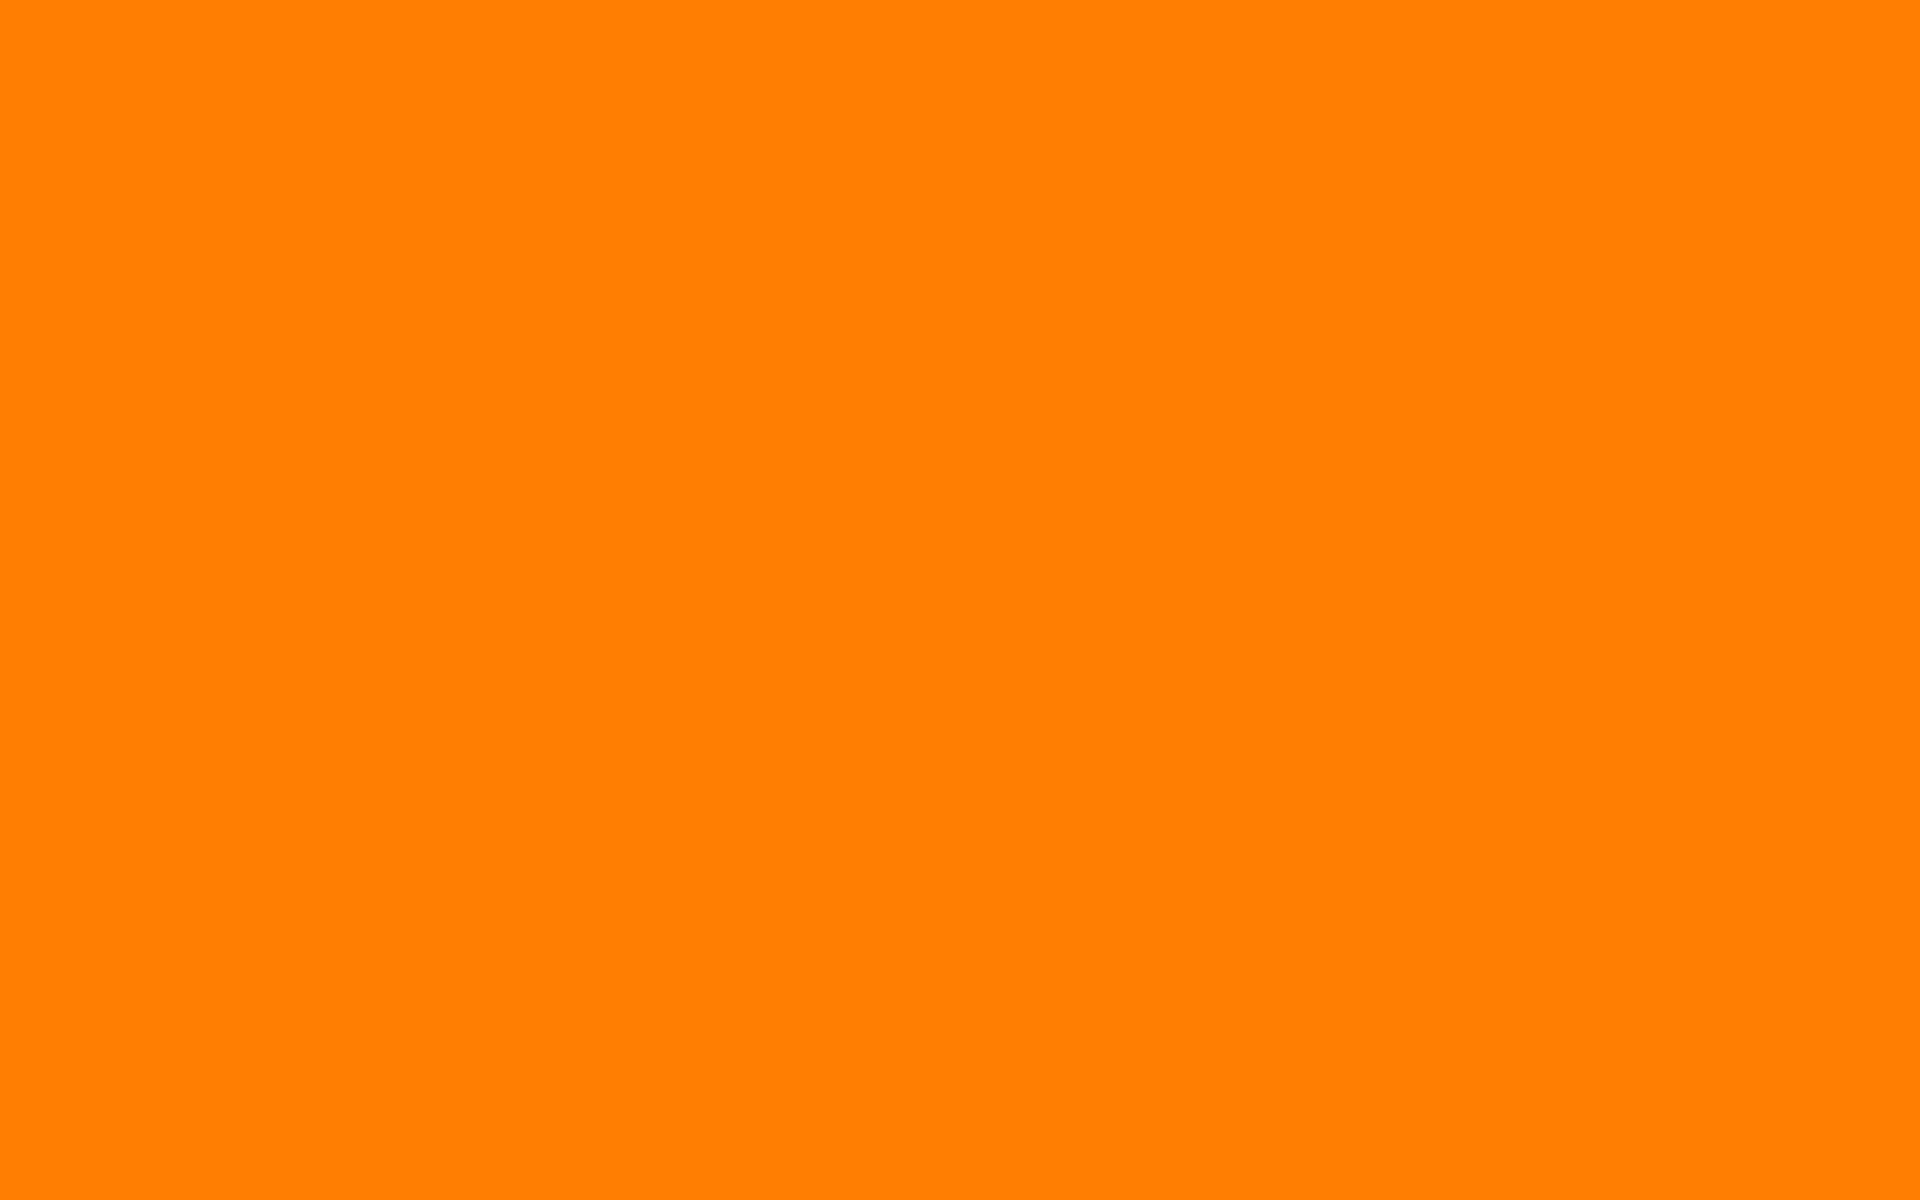 Almindelig Orange 2880 X 1800 Wallpaper